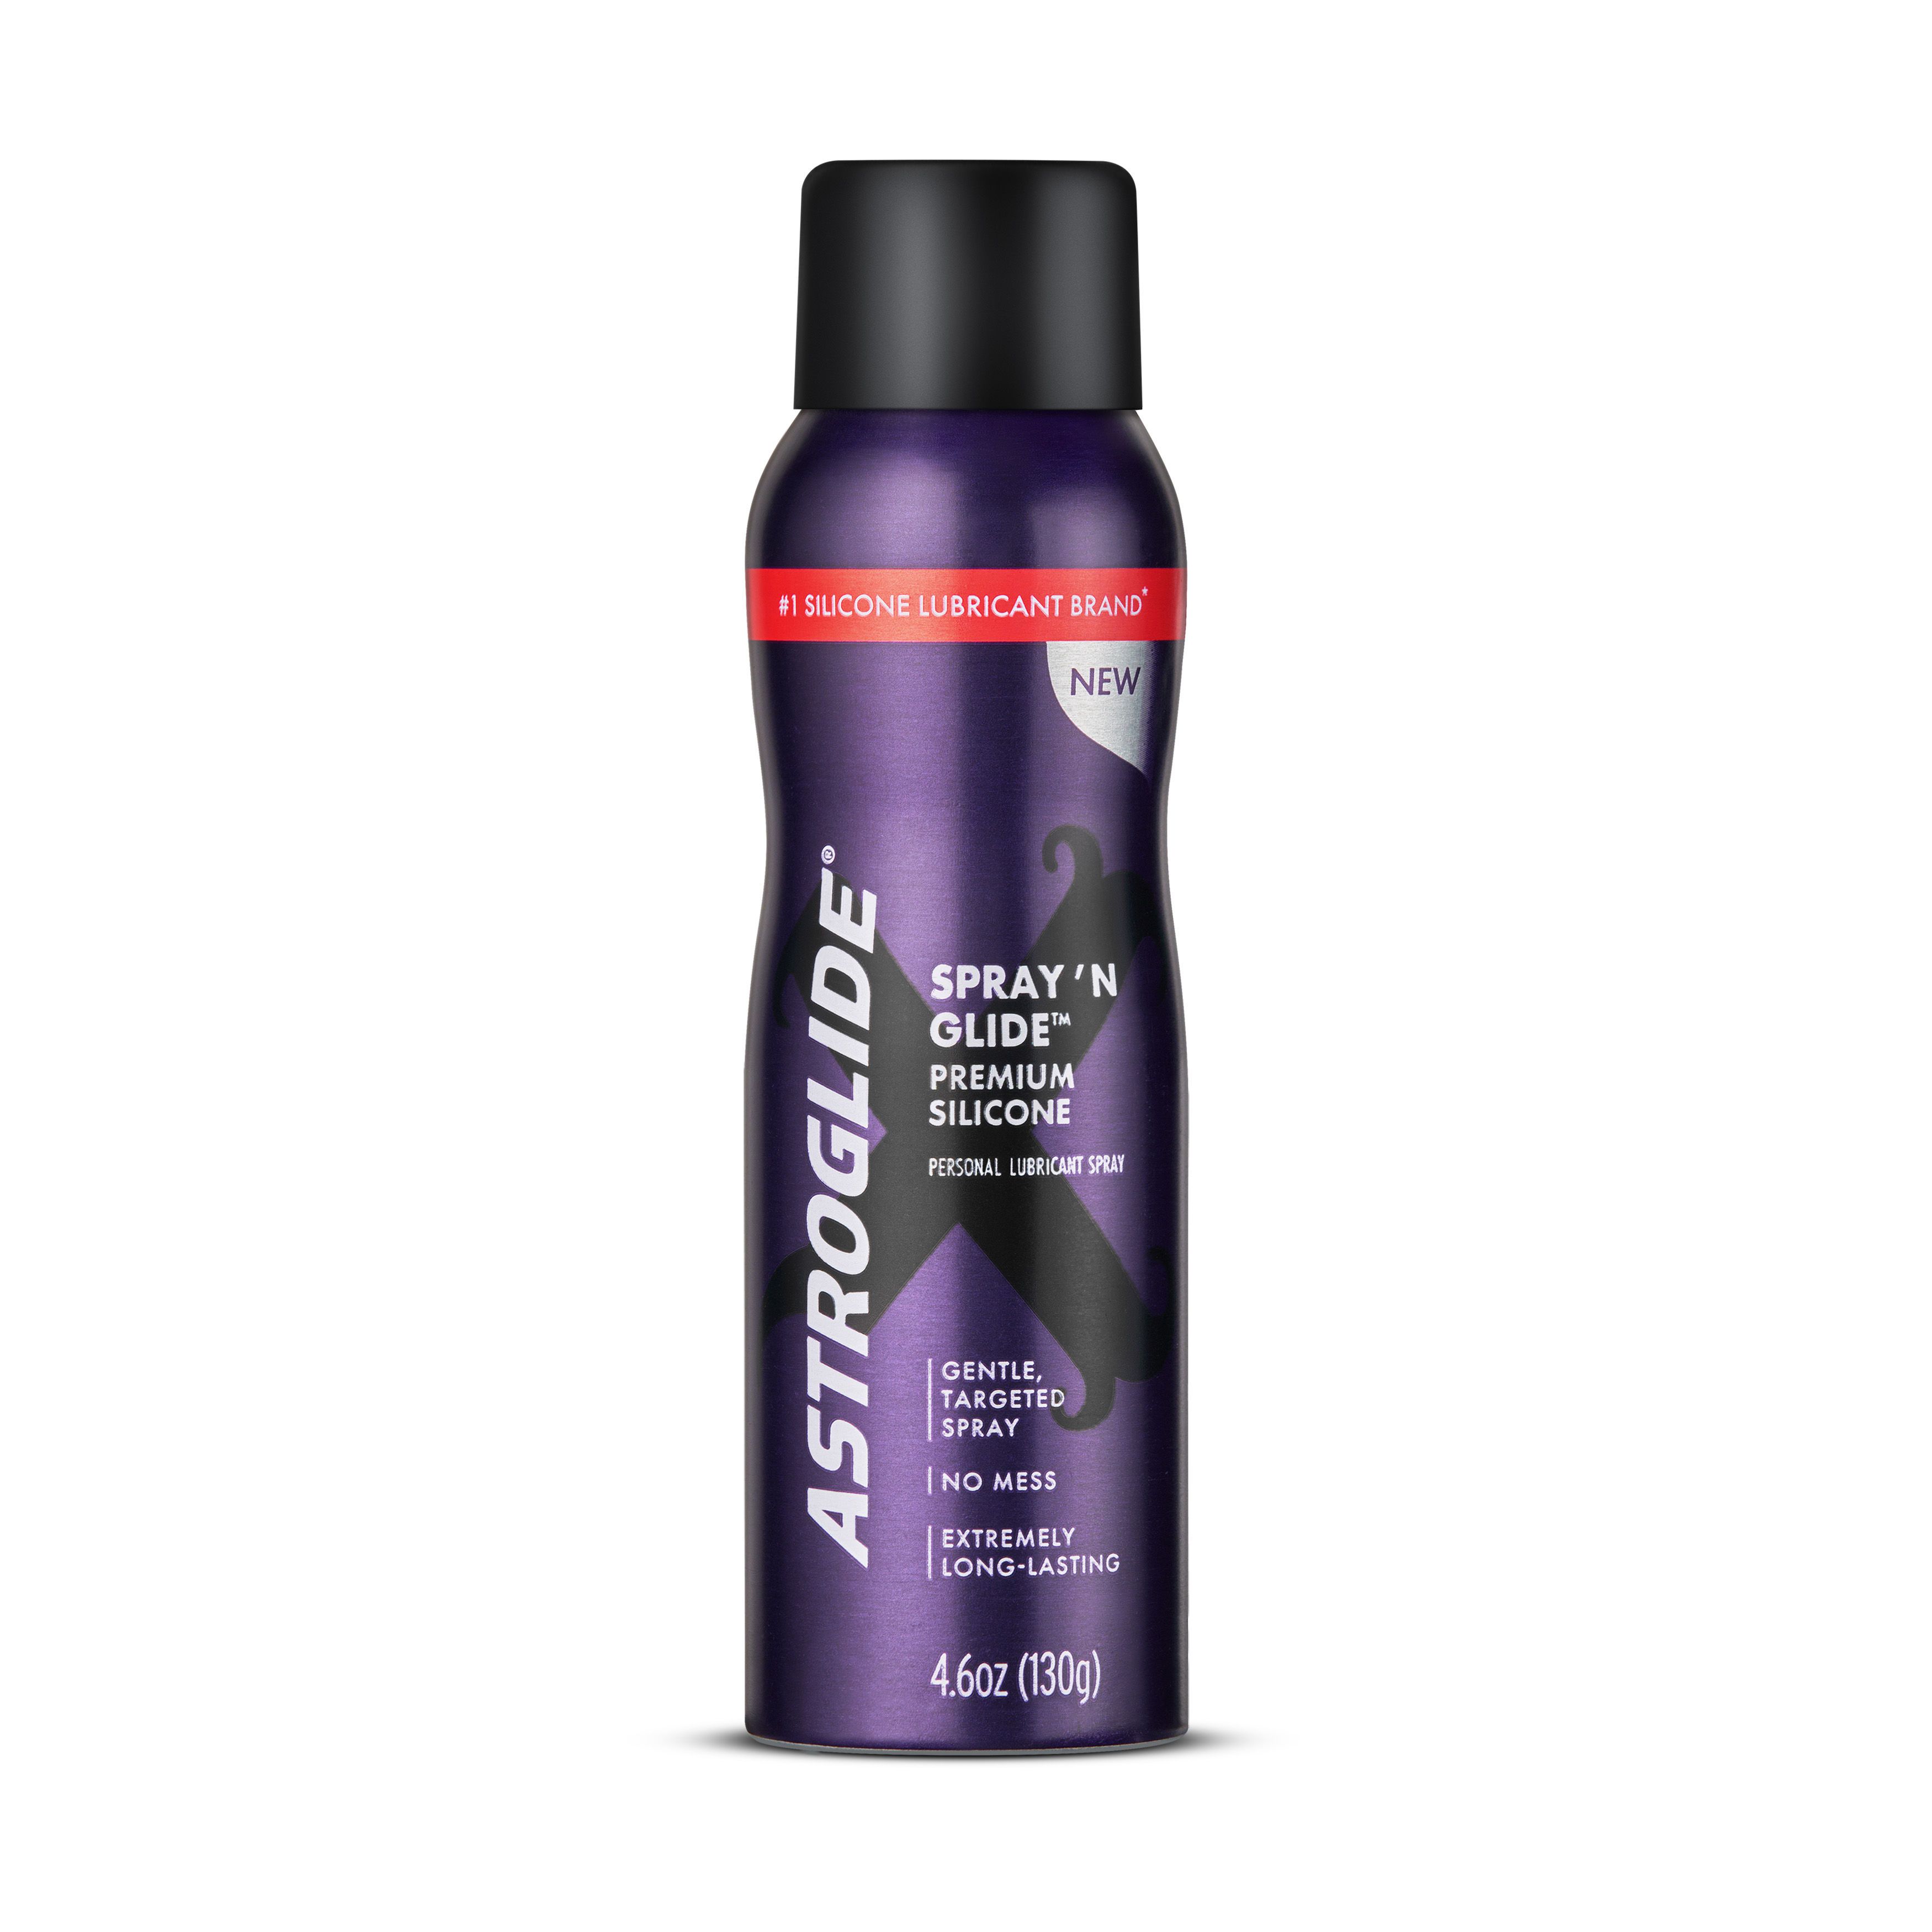 Astroglide x Premium Spray 'n Glide Silicone Based Personal Lubricant 130 gram